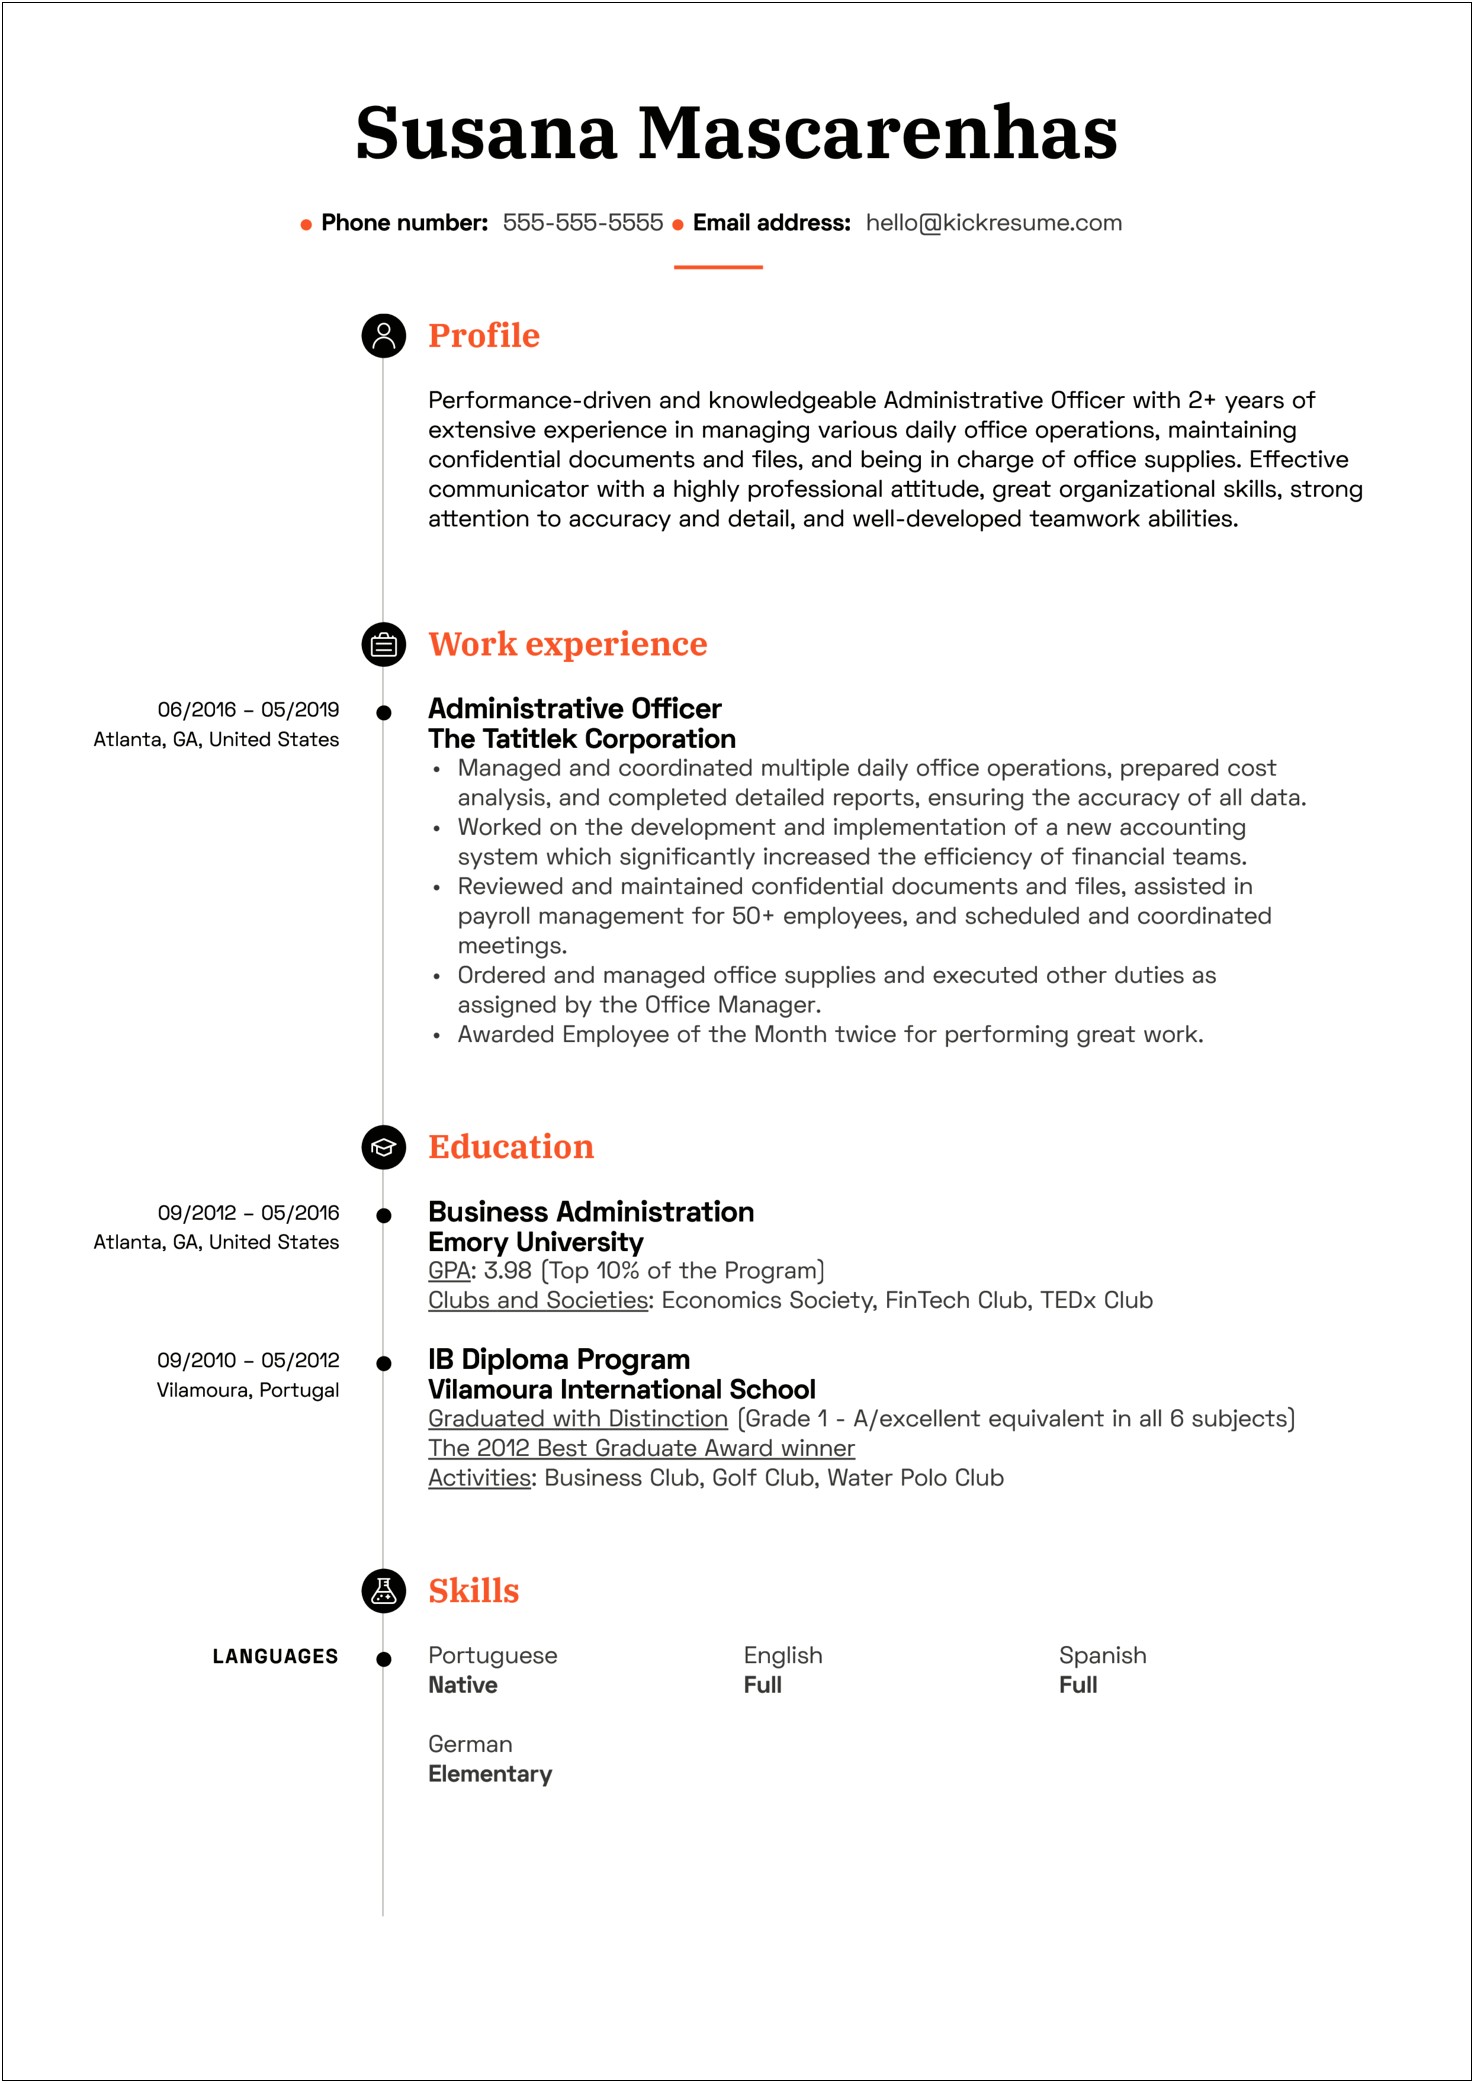 Most Appropriate Resume Format For 50+ Job Seeker